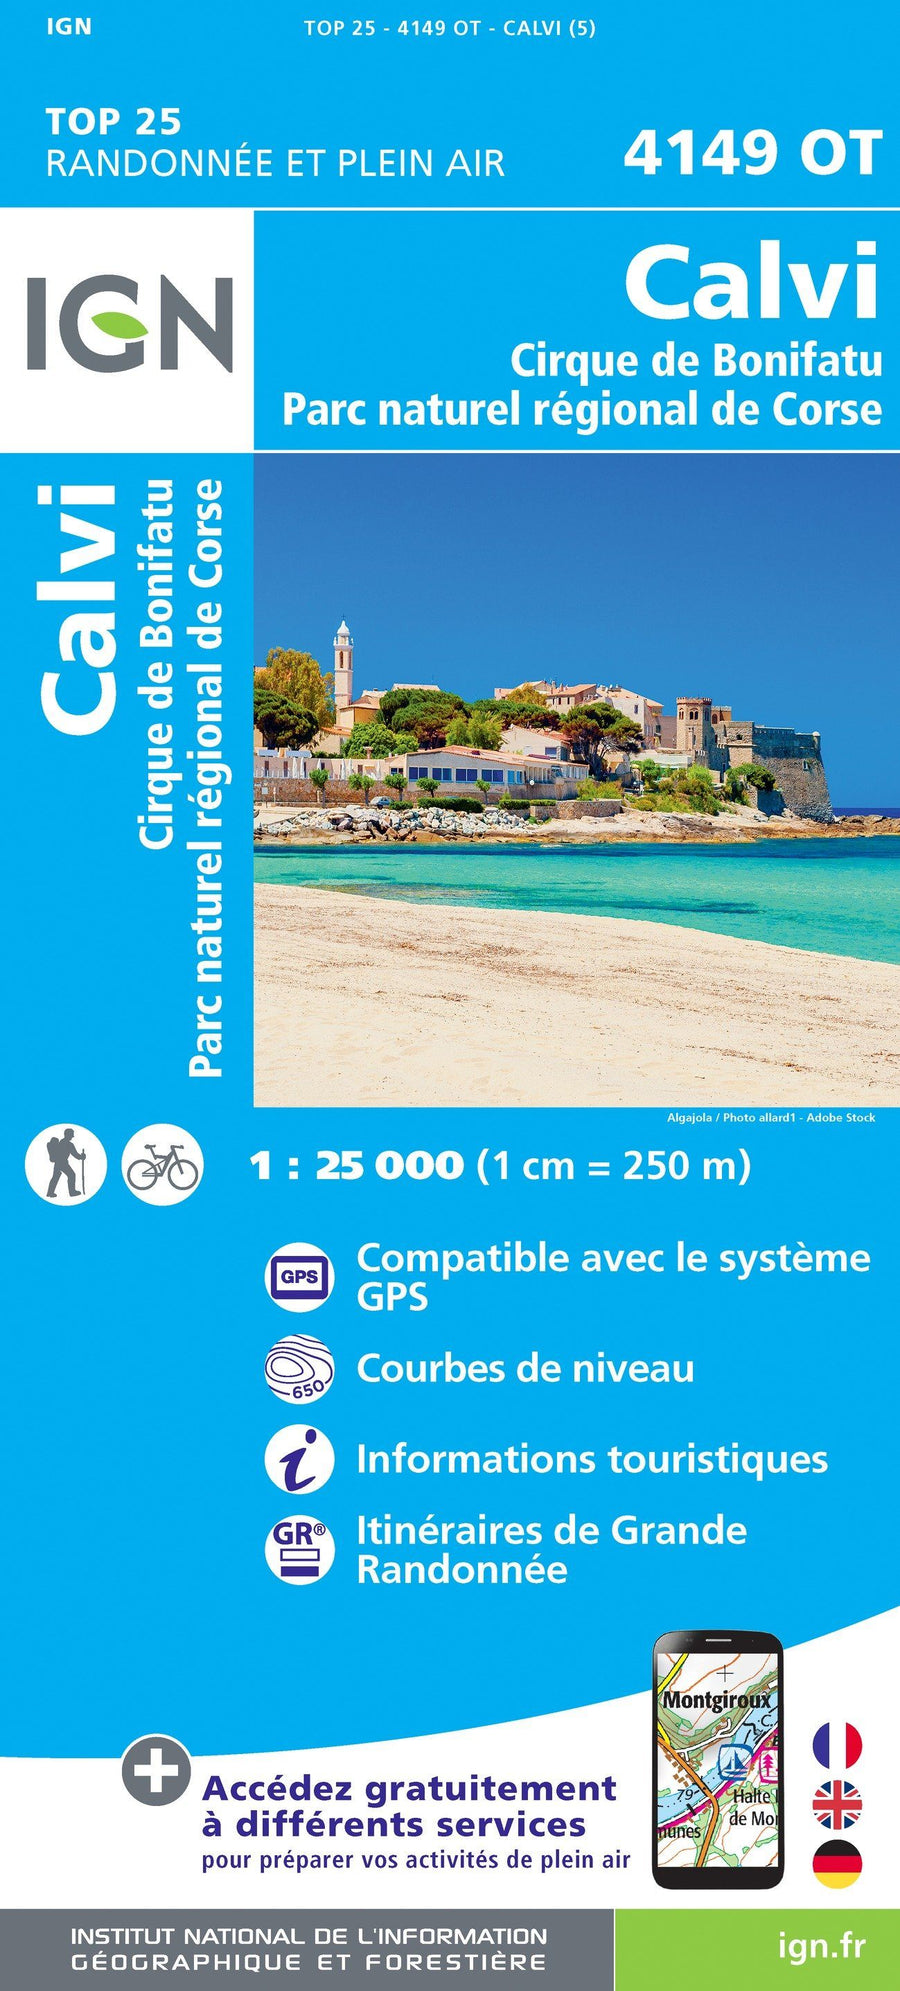 Carte TOP 25 n° 4149 OT - Calvi, Cirque de Bonifatu (PNR de Corse) | IGN carte pliée IGN 